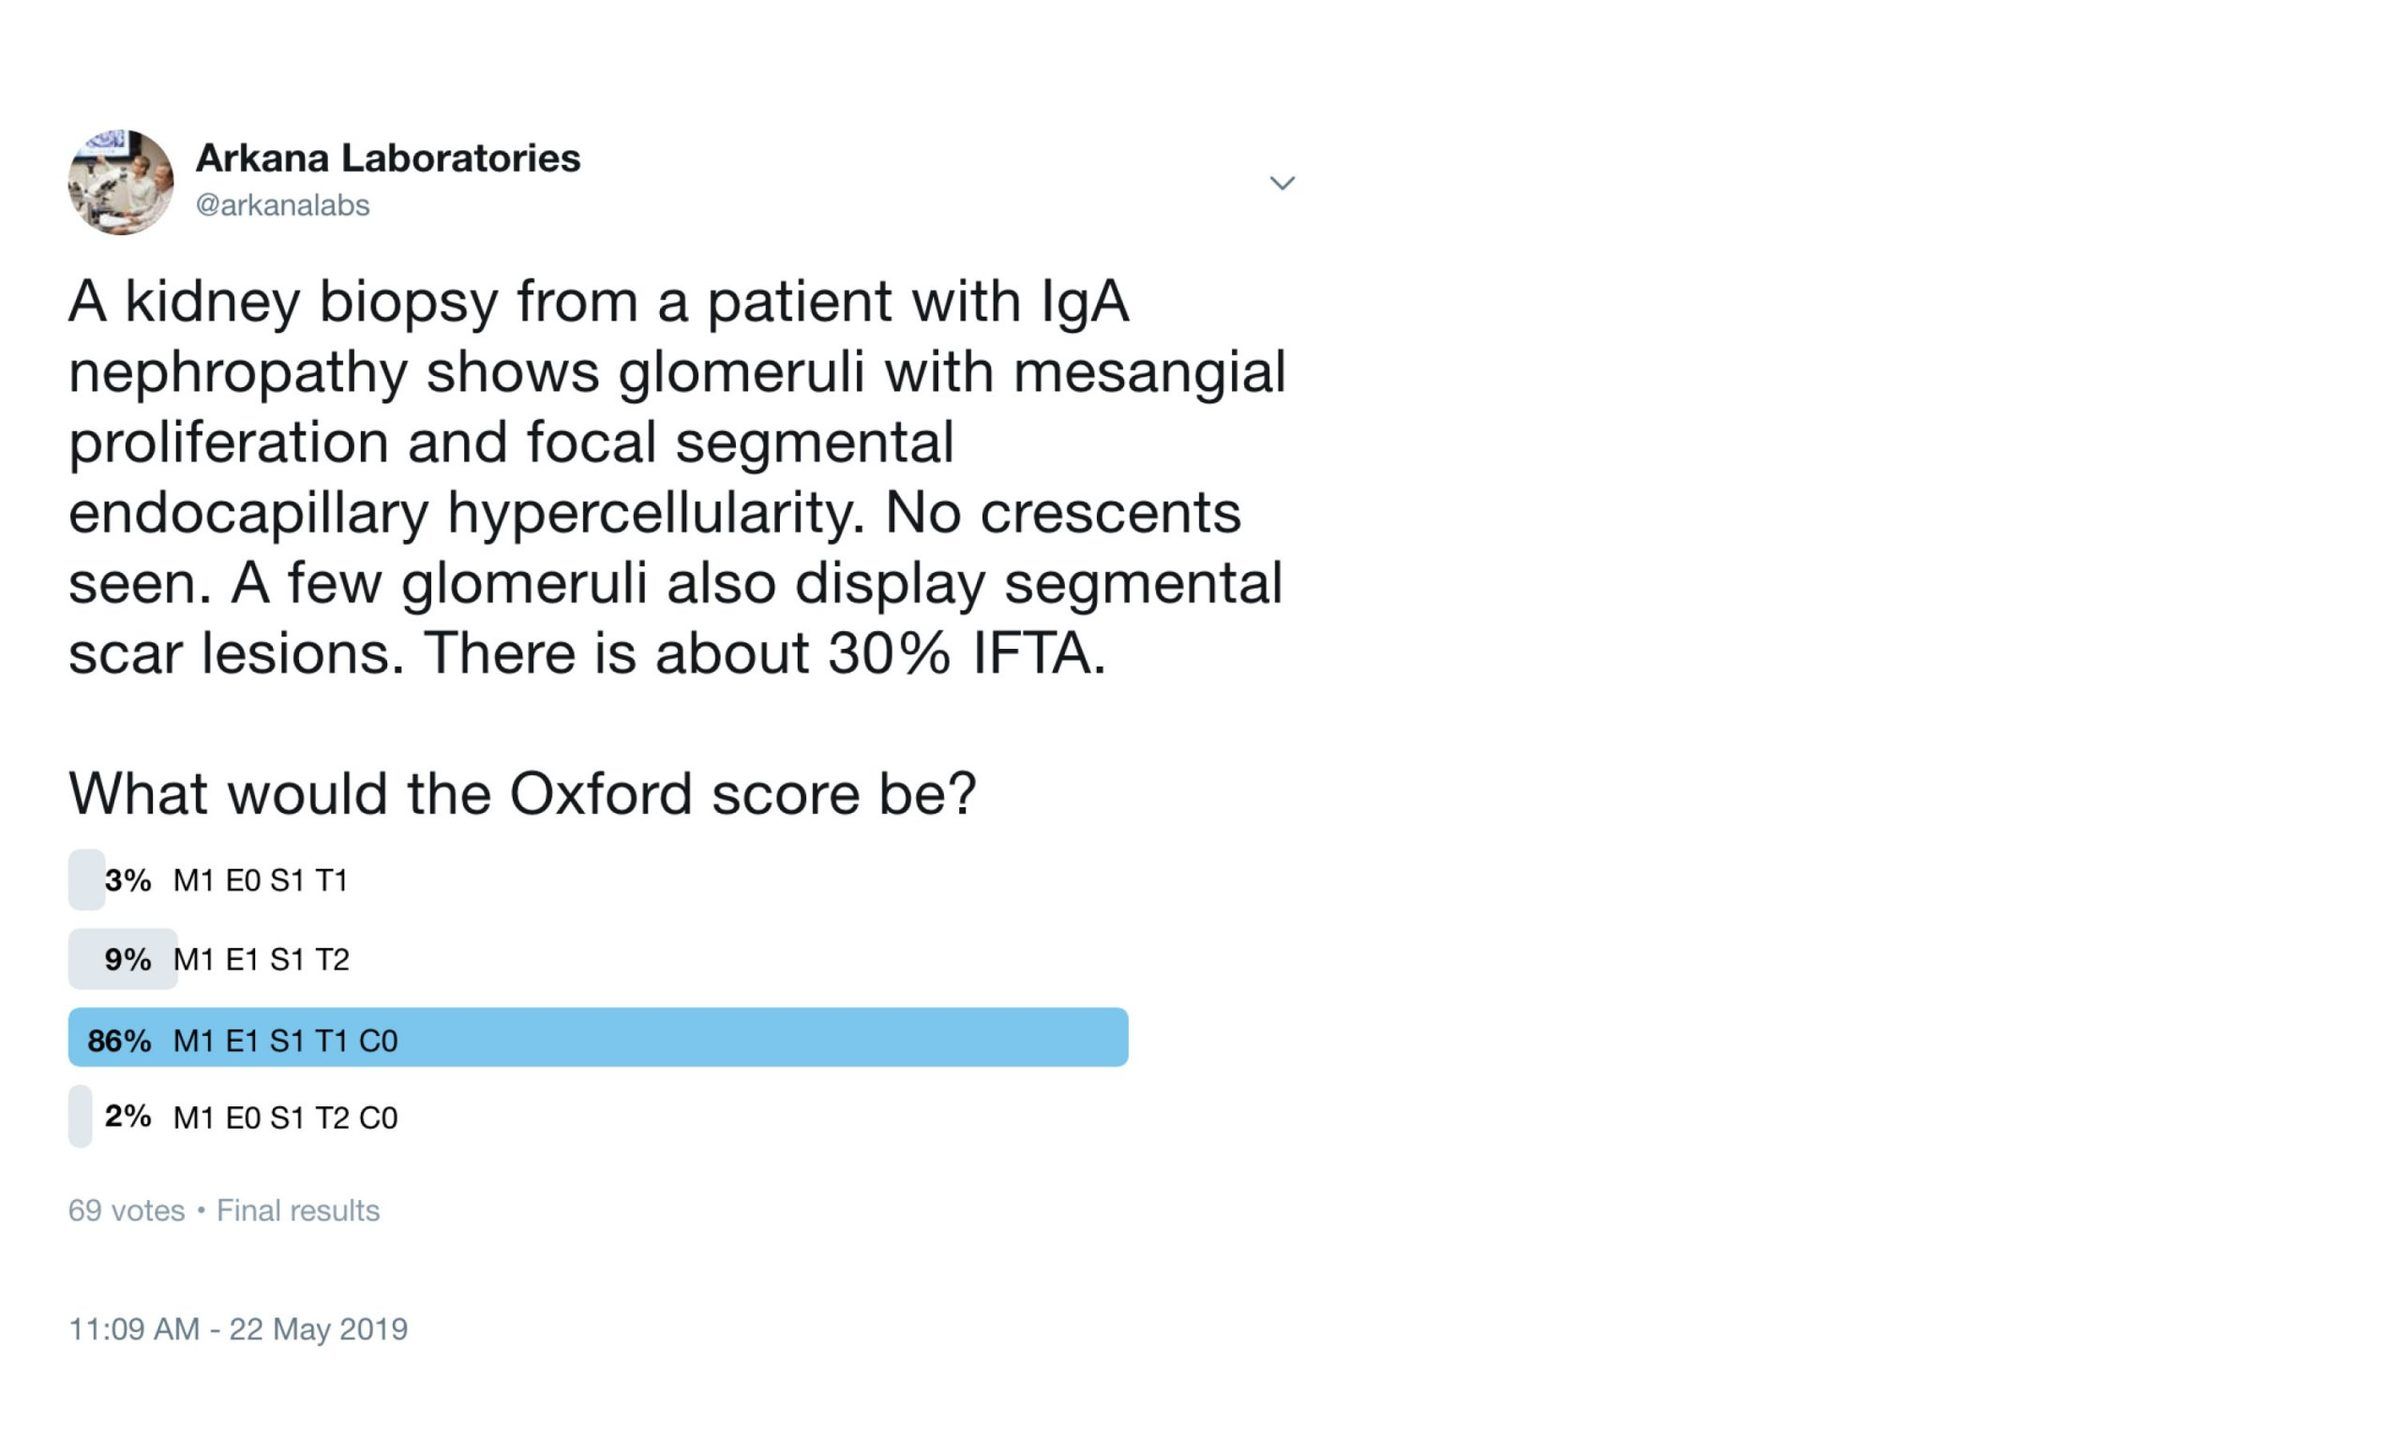 IgA nephropathy, Twitter Poll, Arkana Laboratories, kidney pathology, renal disease